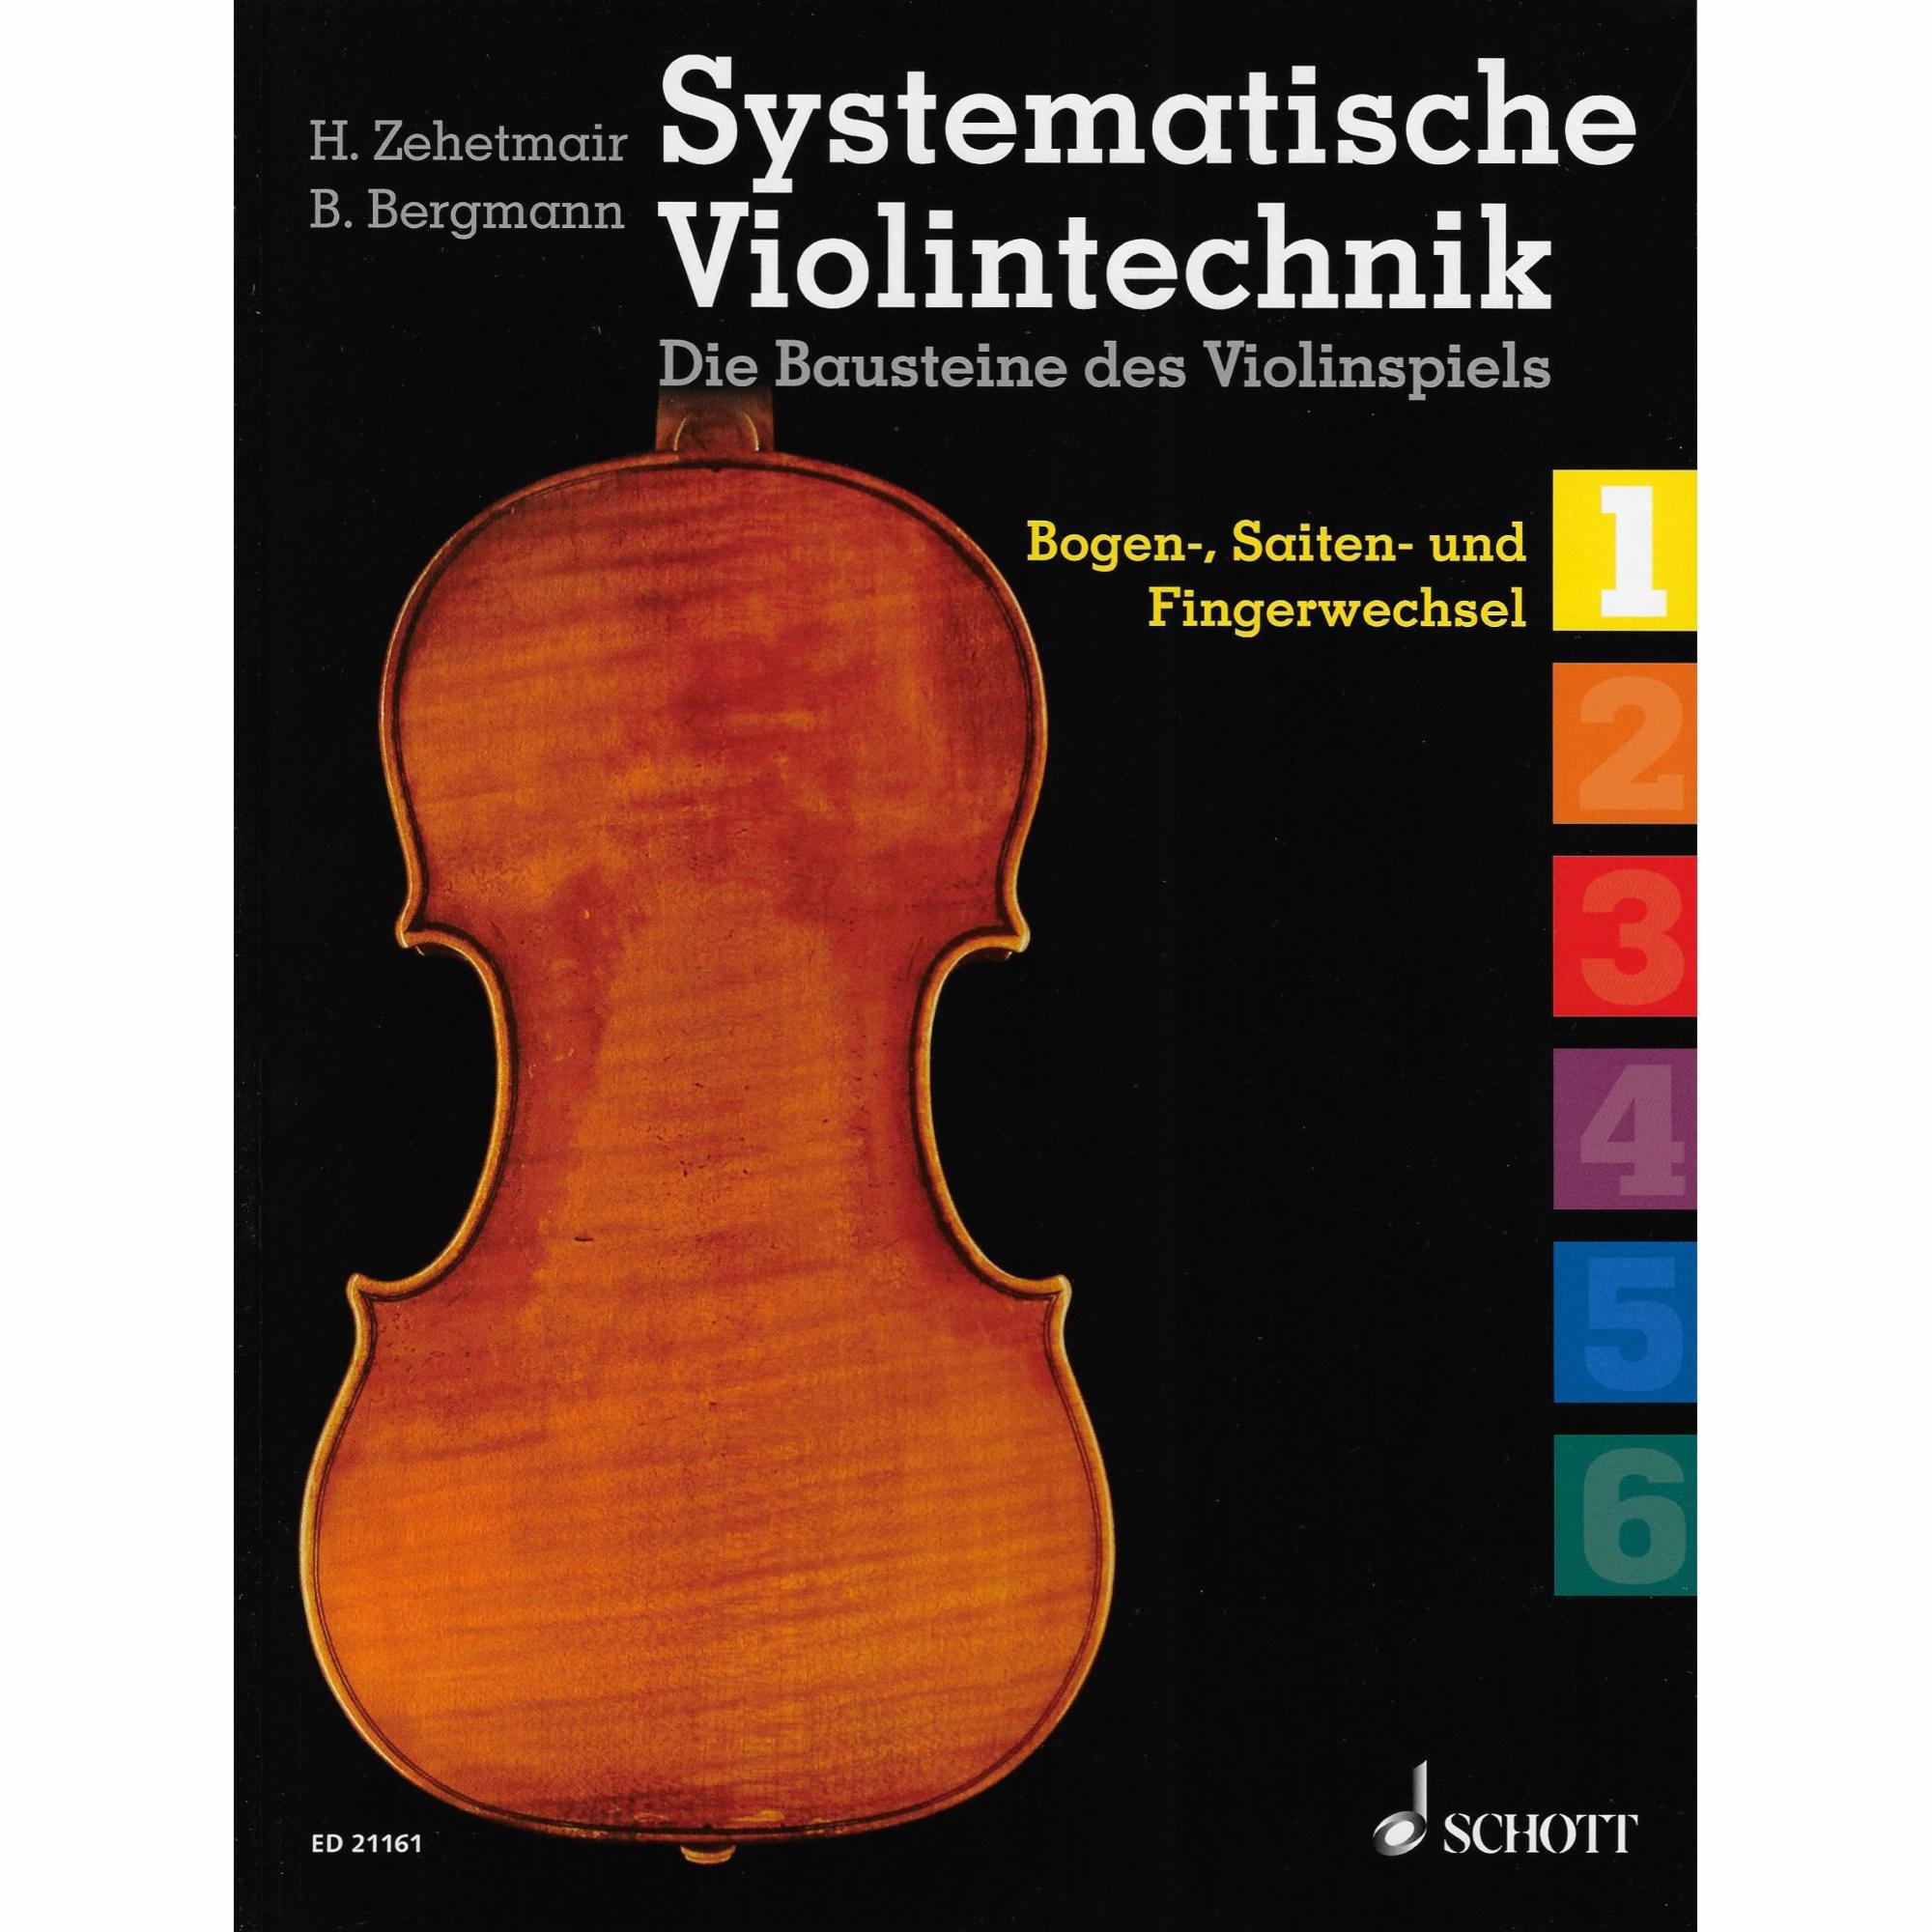 Zehetmair & Bergmann -- Systematic Violin Technique, Books 1-6